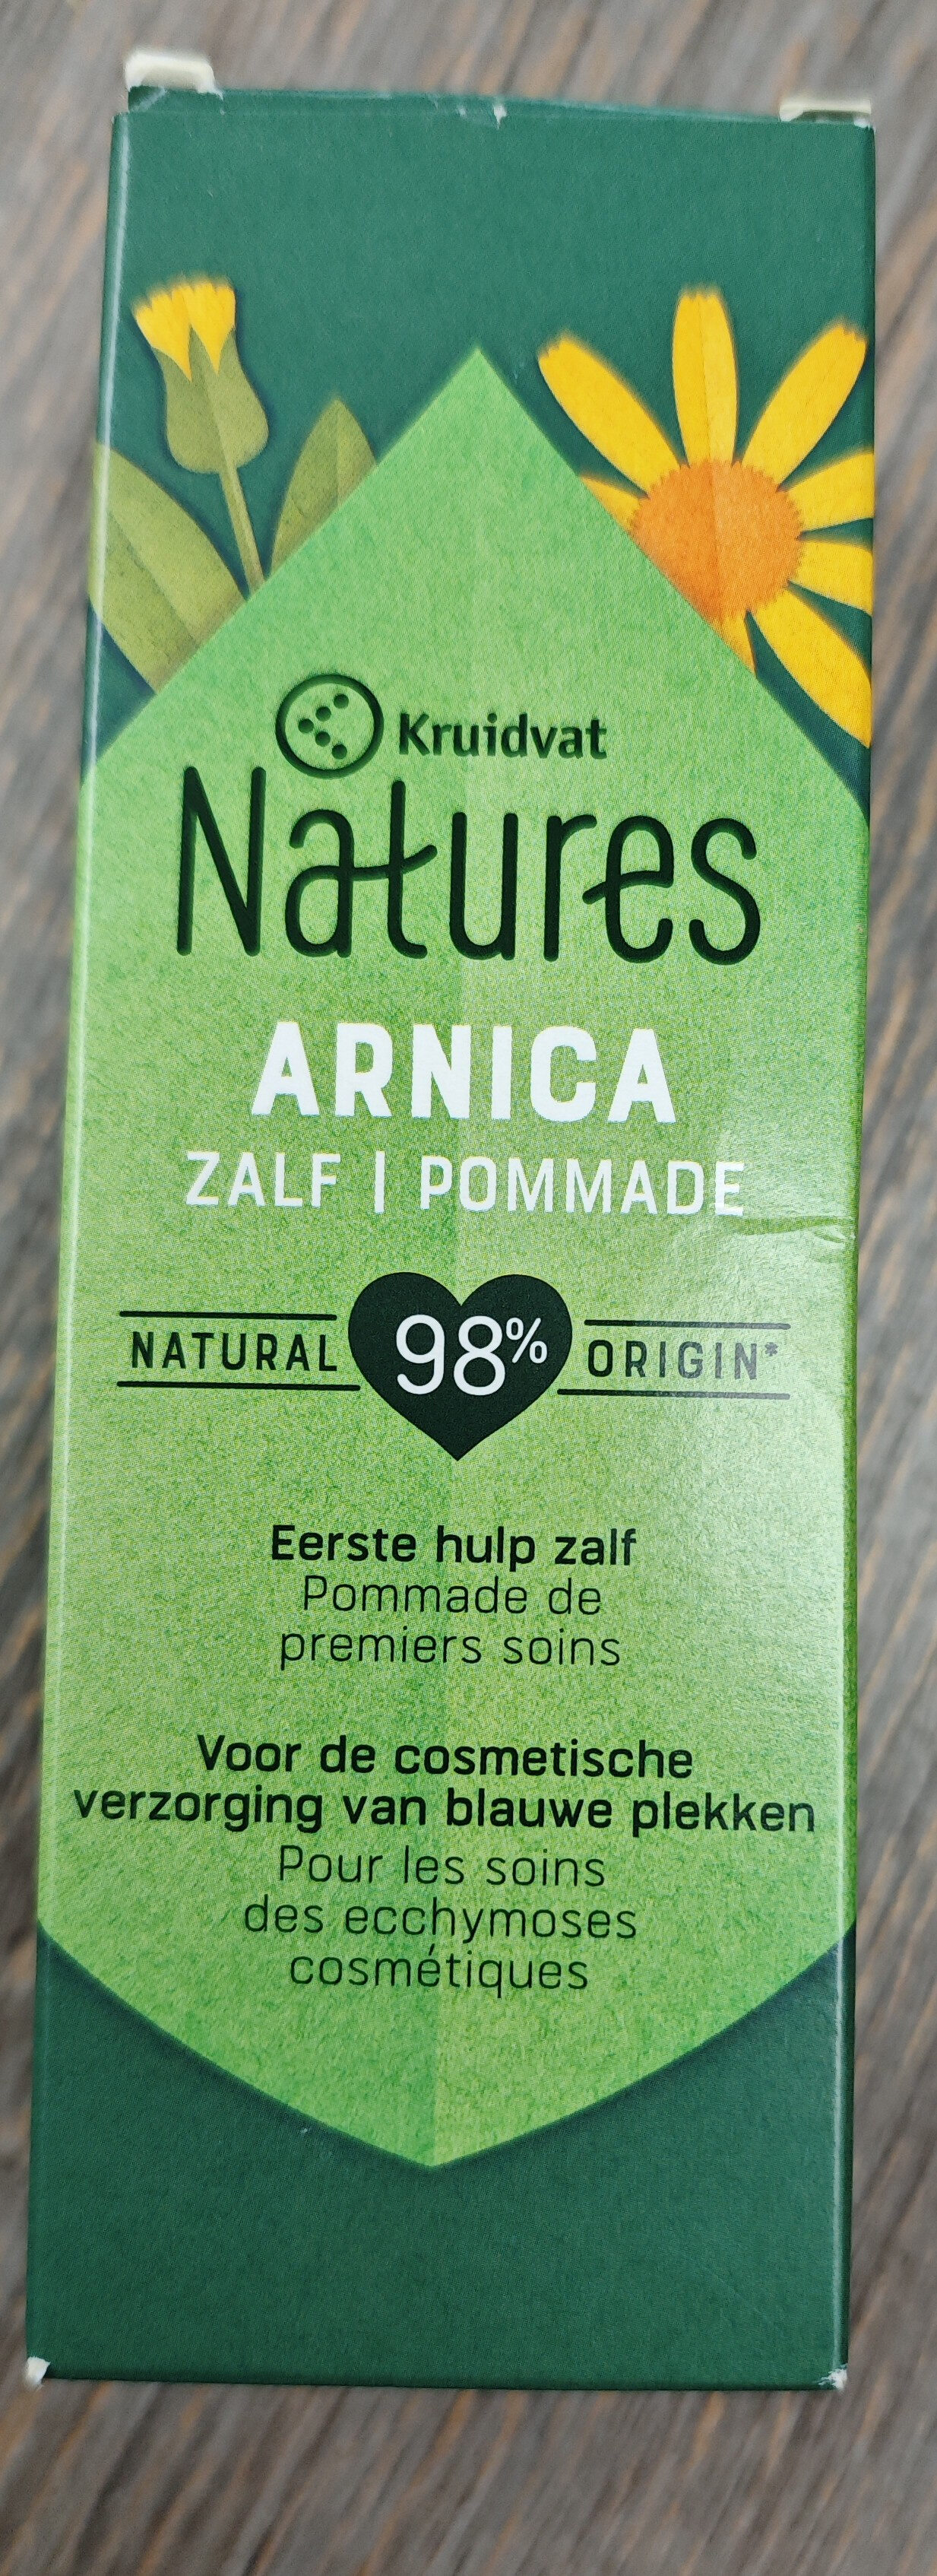 Kruidvat Natures Arnica - Produktas - fr